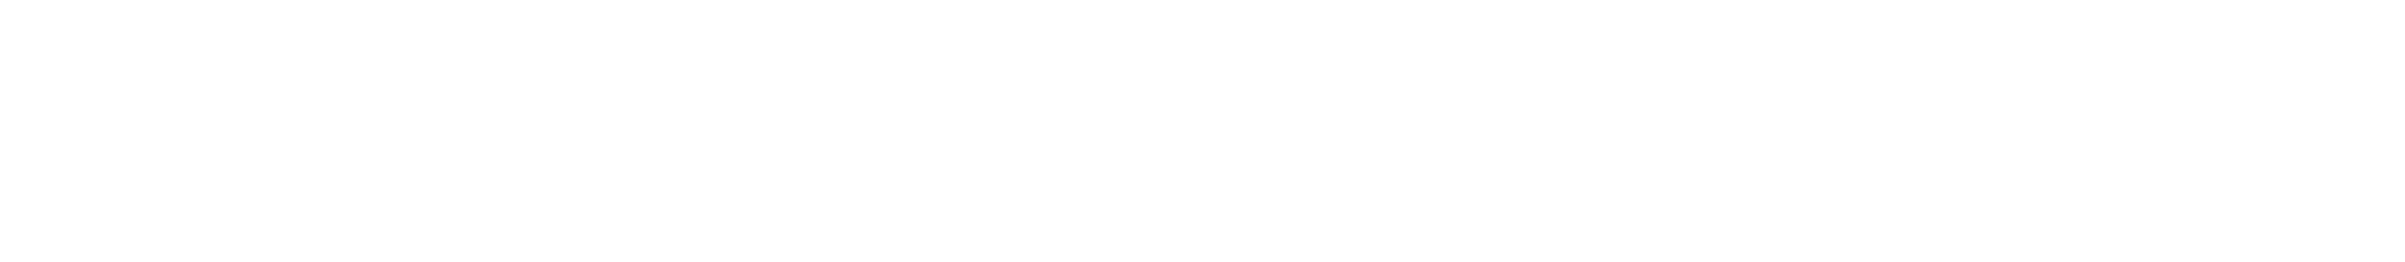 Envoy Global Logo